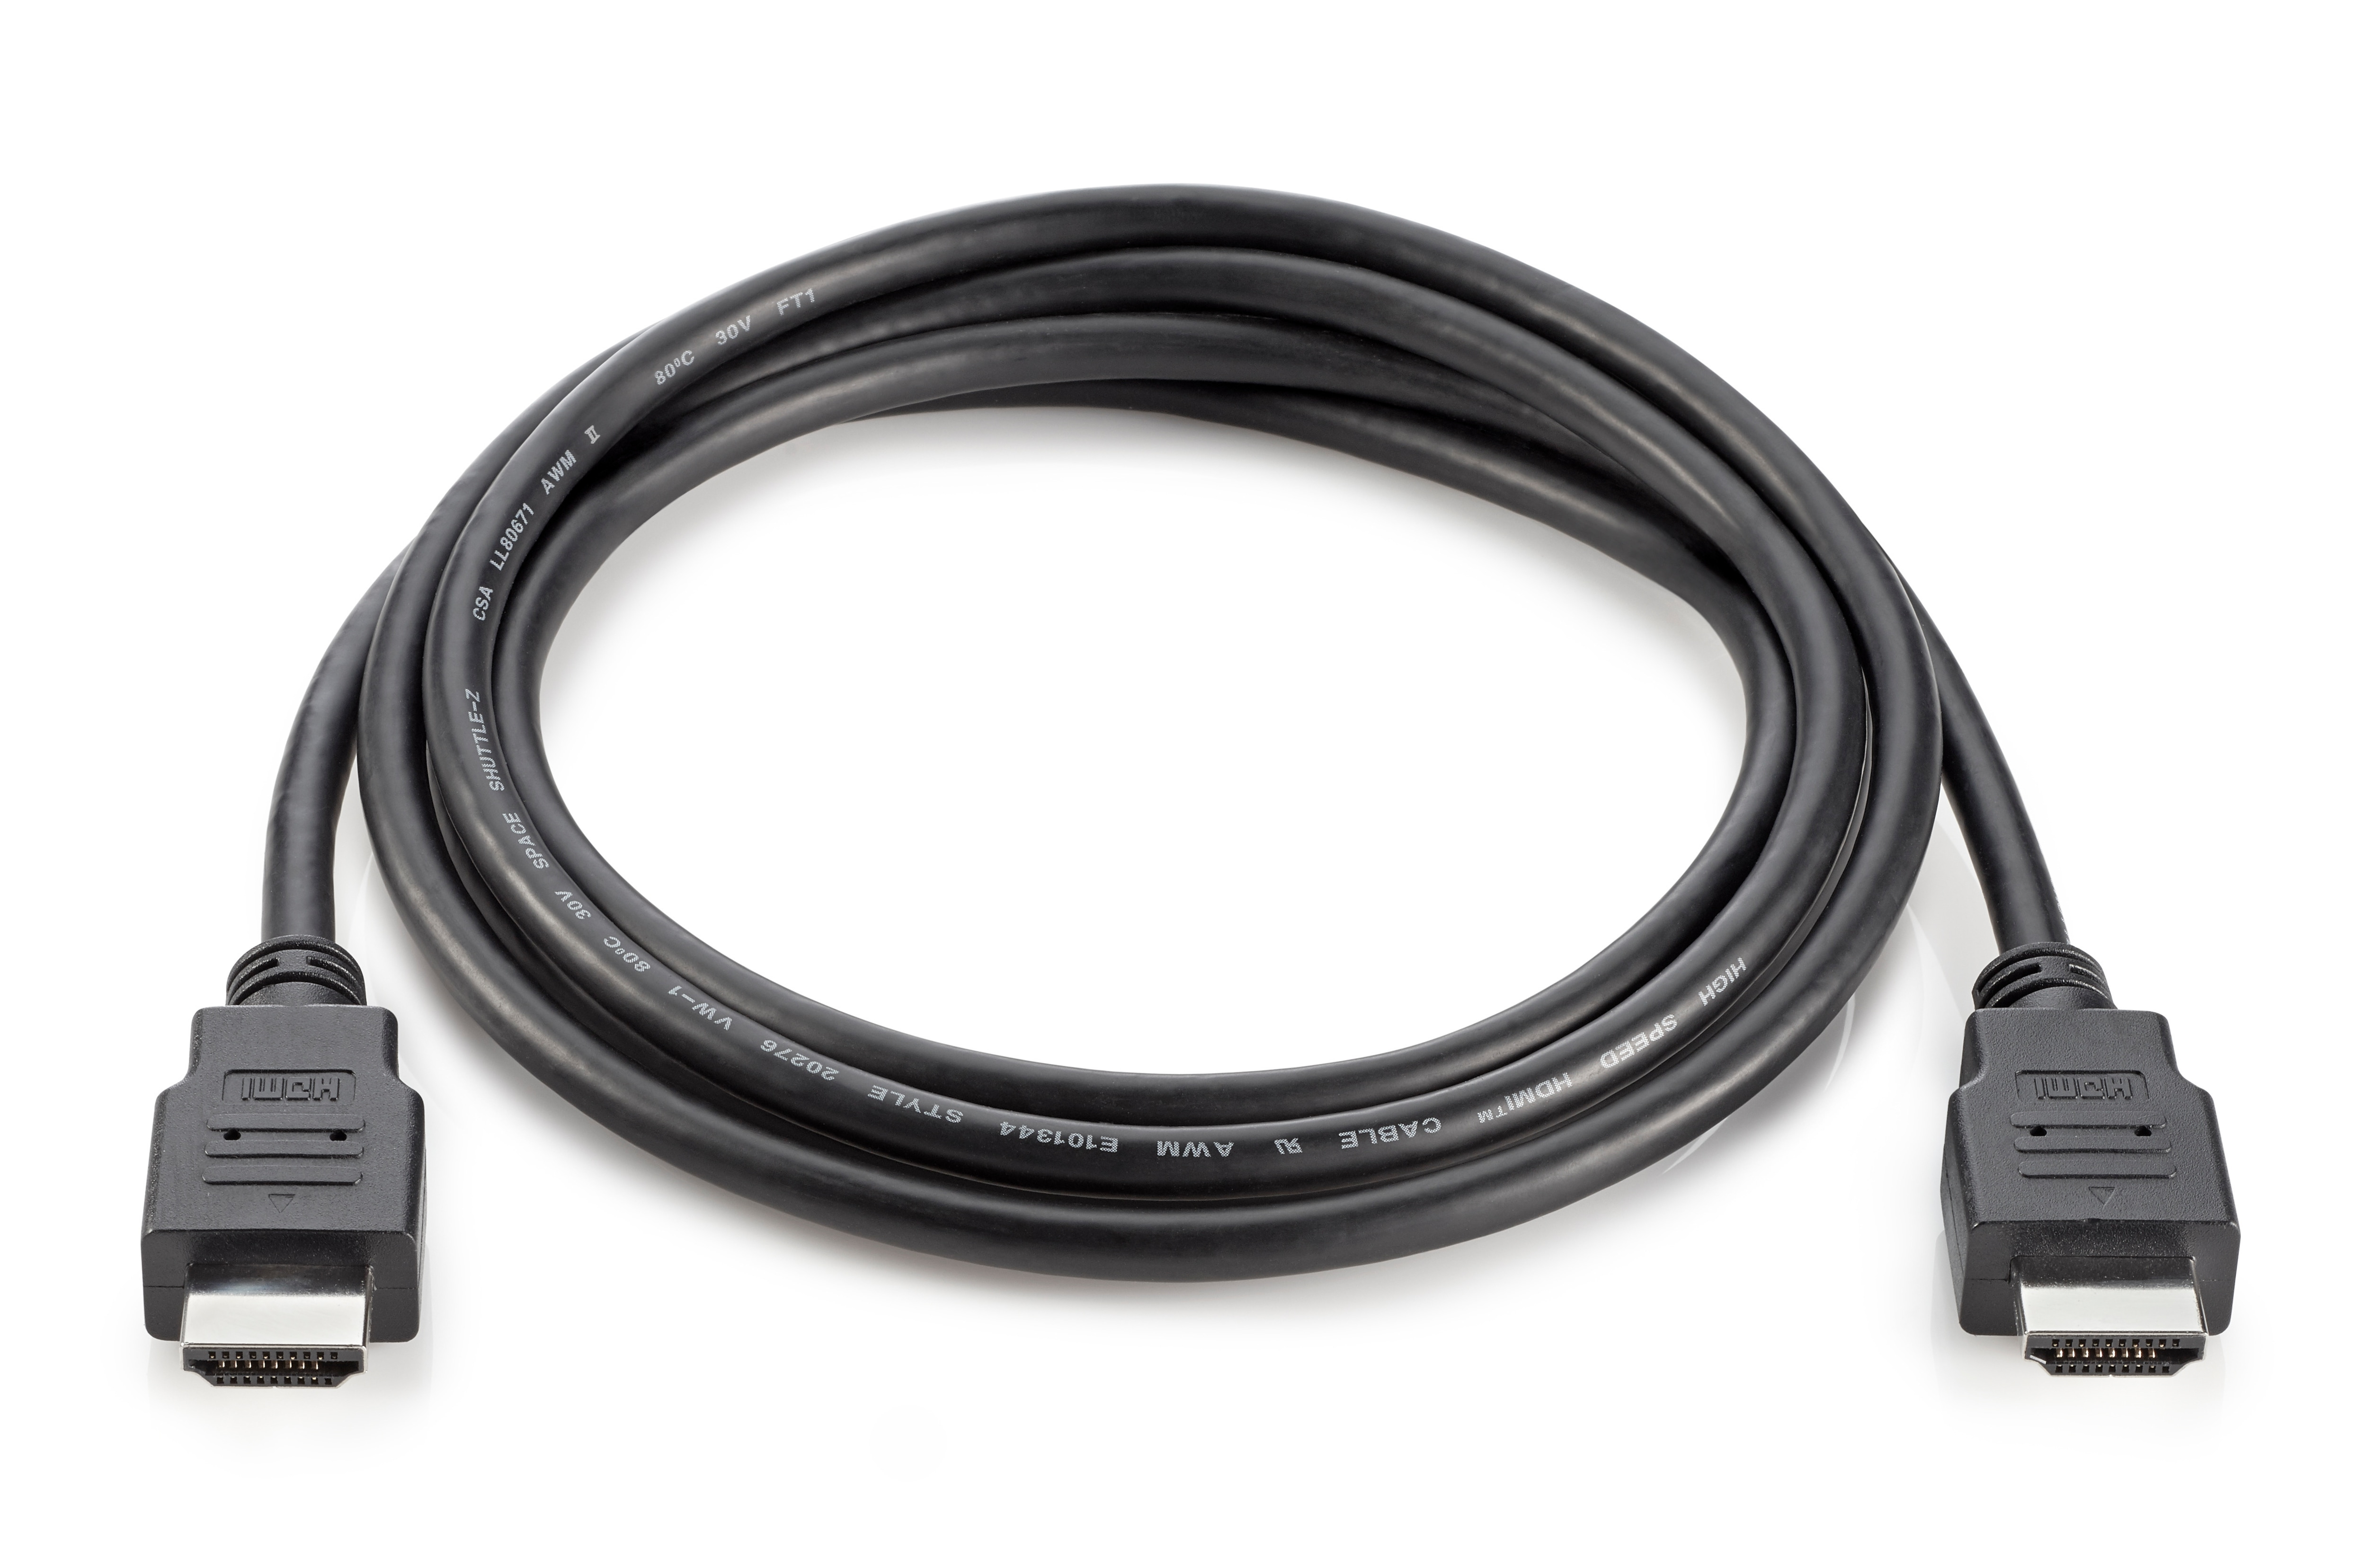 HP Standard Cable Kit - HDMI-Kabel - HDMI (M)